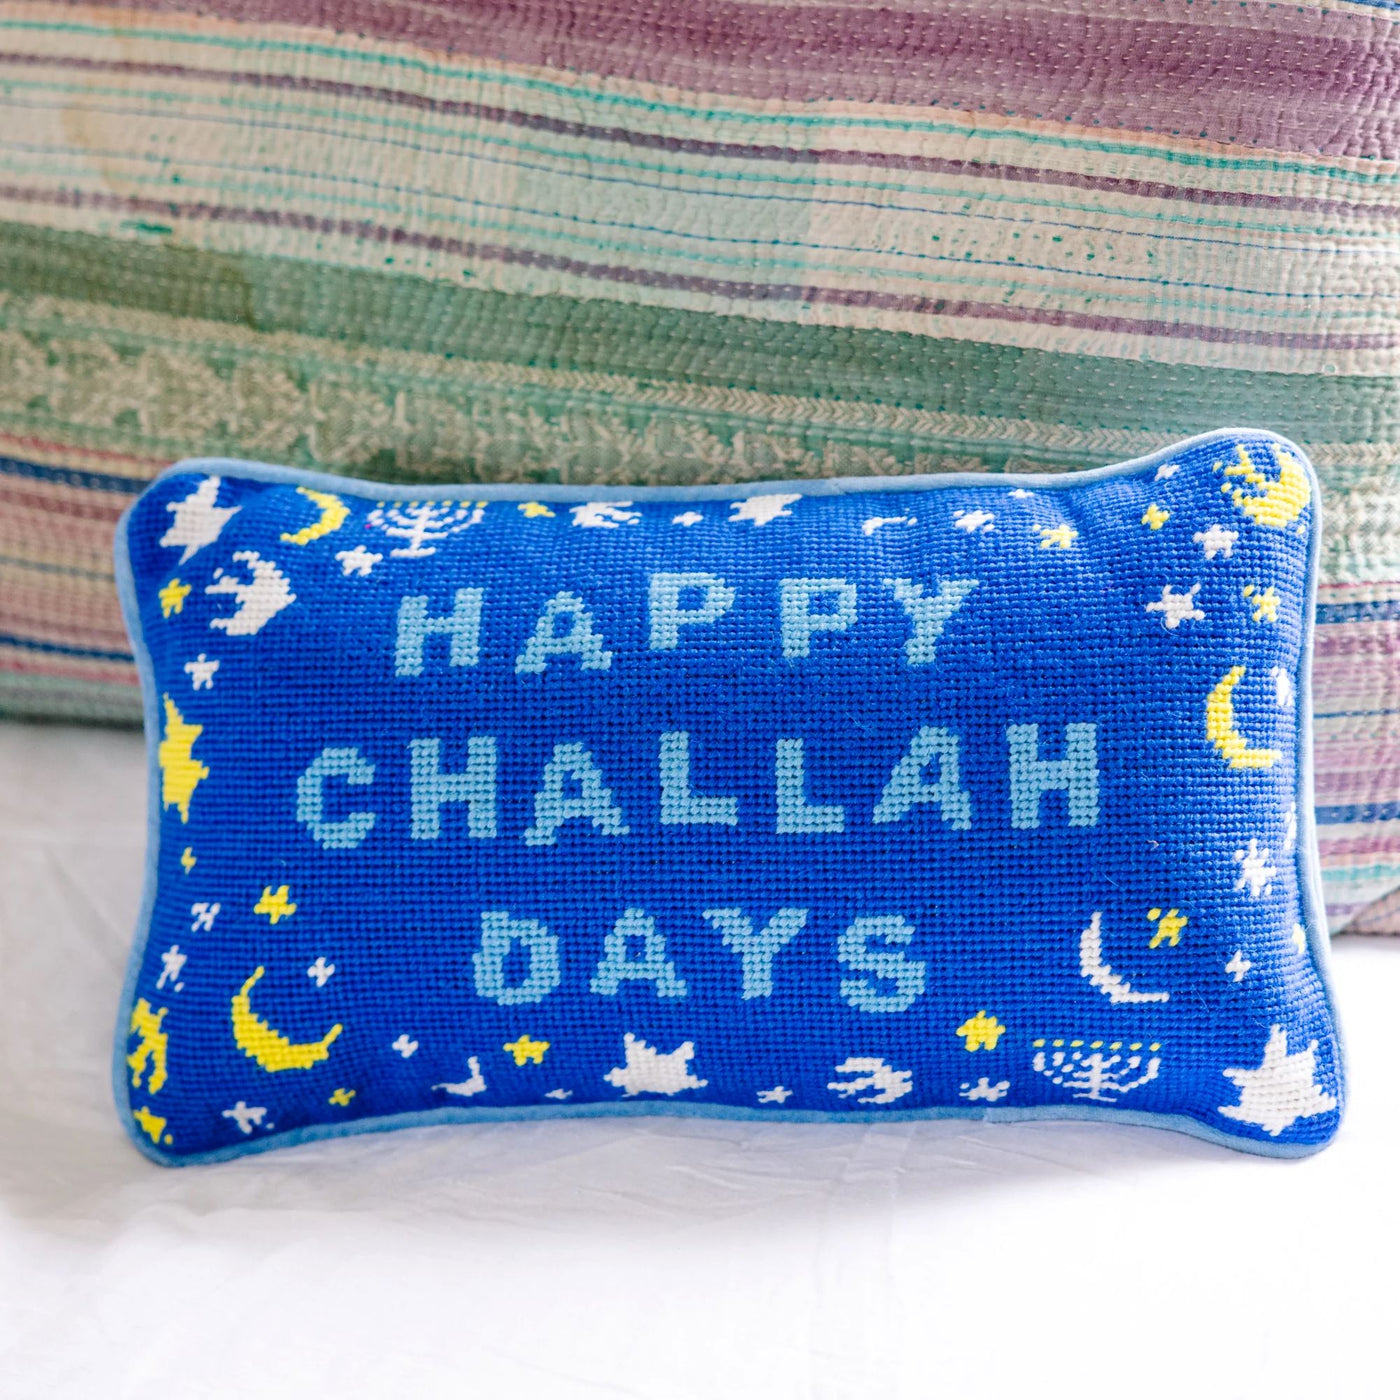 Happy Challah Days Needlepoint Pillow Pillows Furbish 